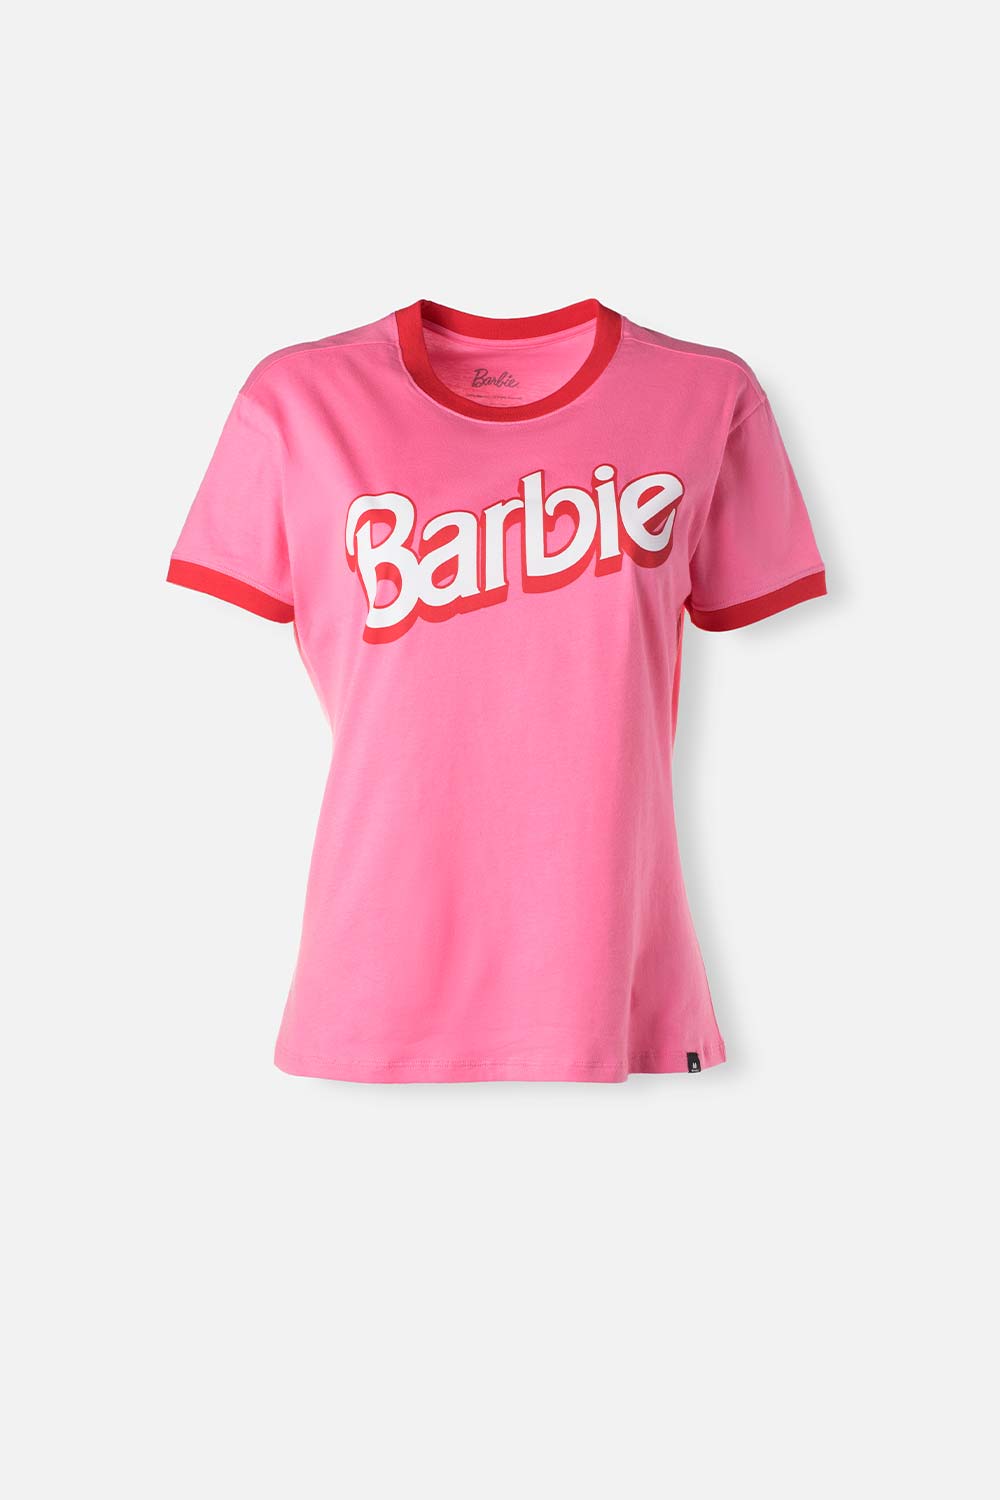 Camiseta de Barbie rosada manga corta para mujer XS-0